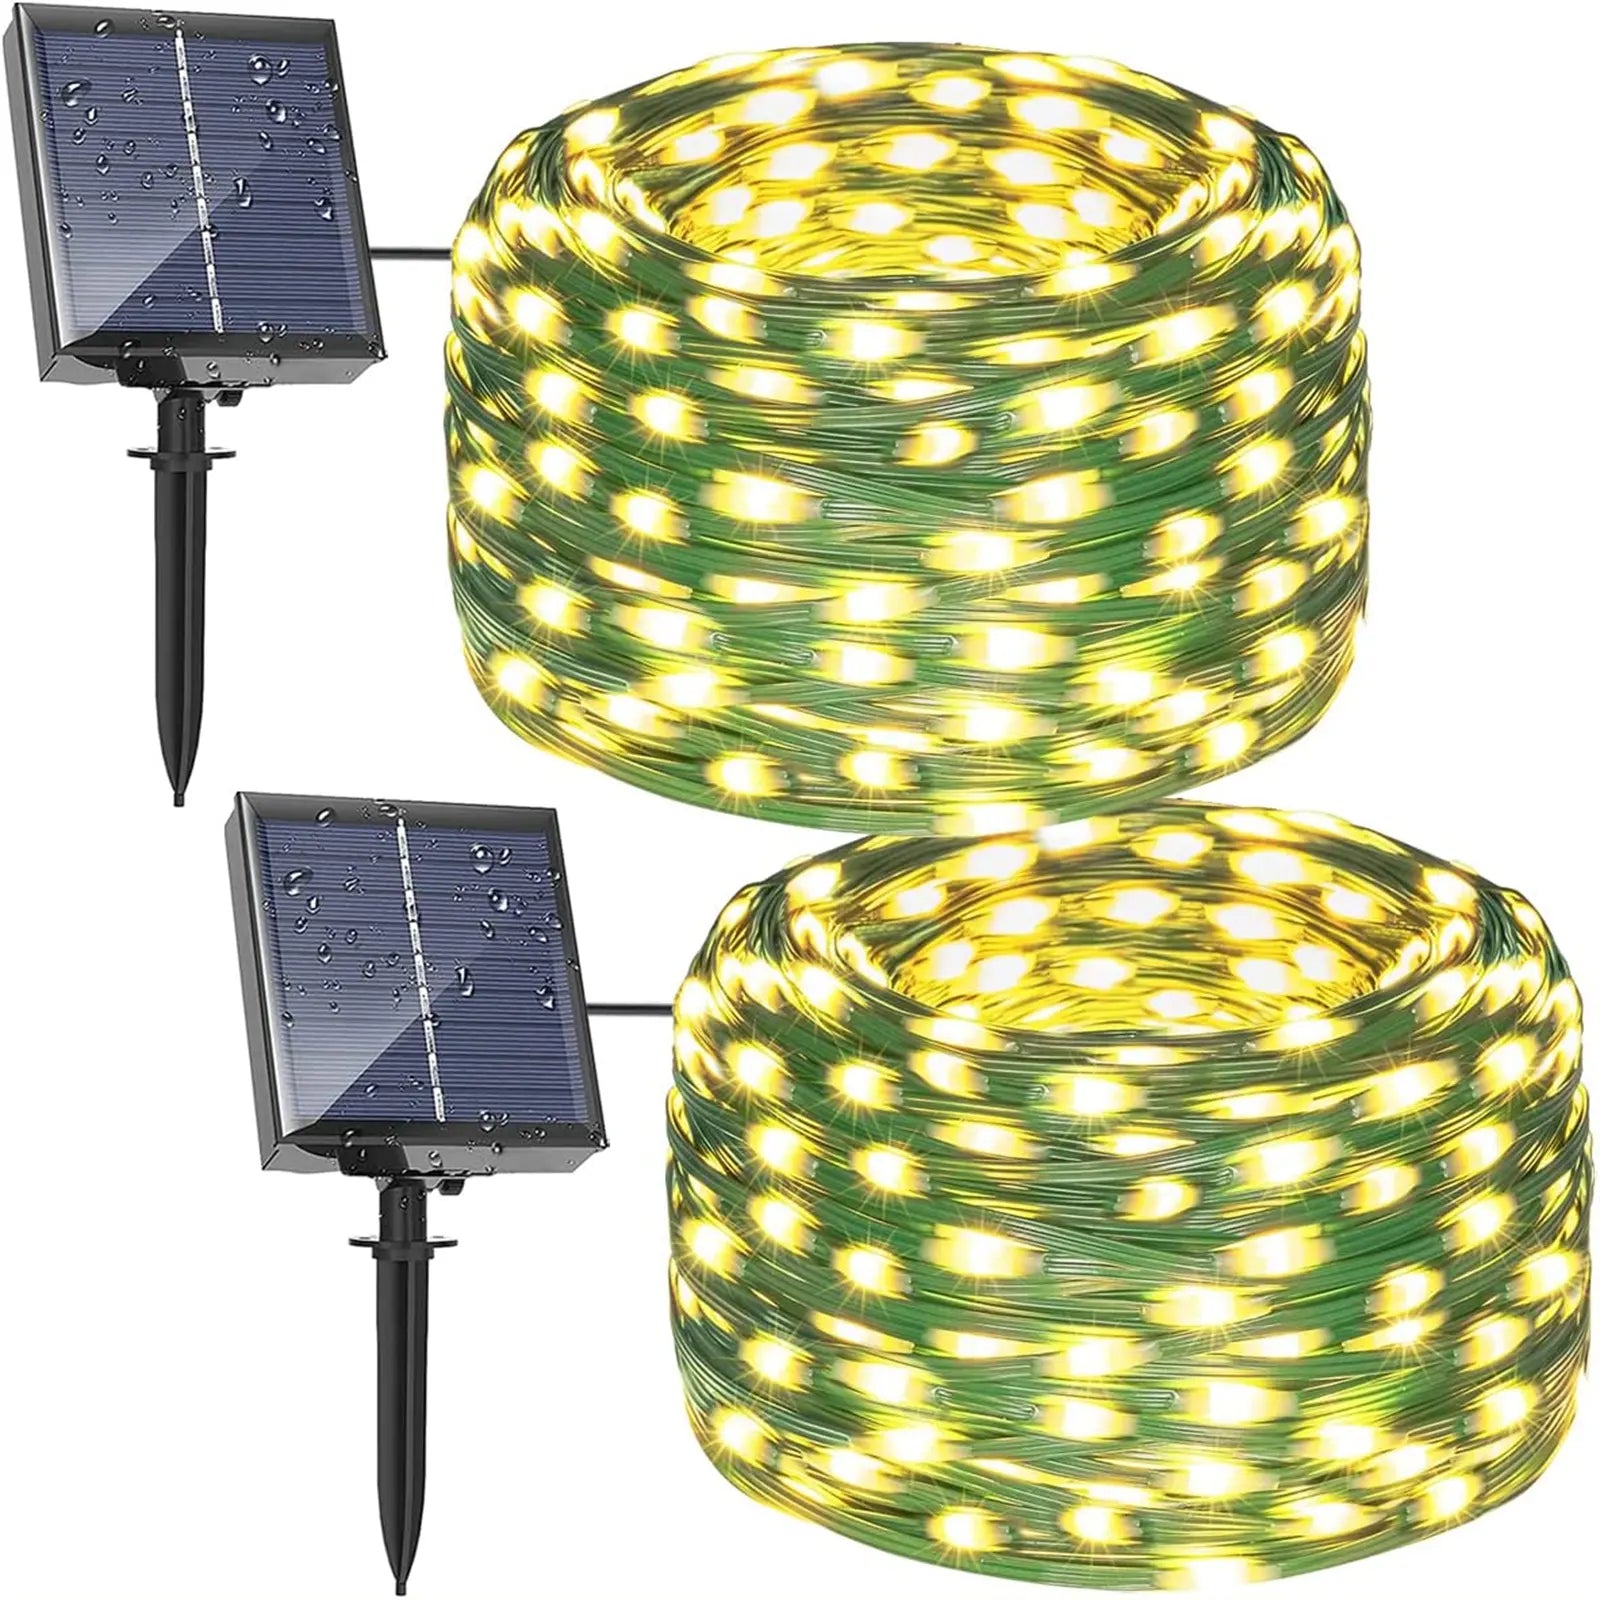 2 Pack Solar String Lights Outdoor, 200LED/75ft IP67 Waterproof 8 Lighting Modes